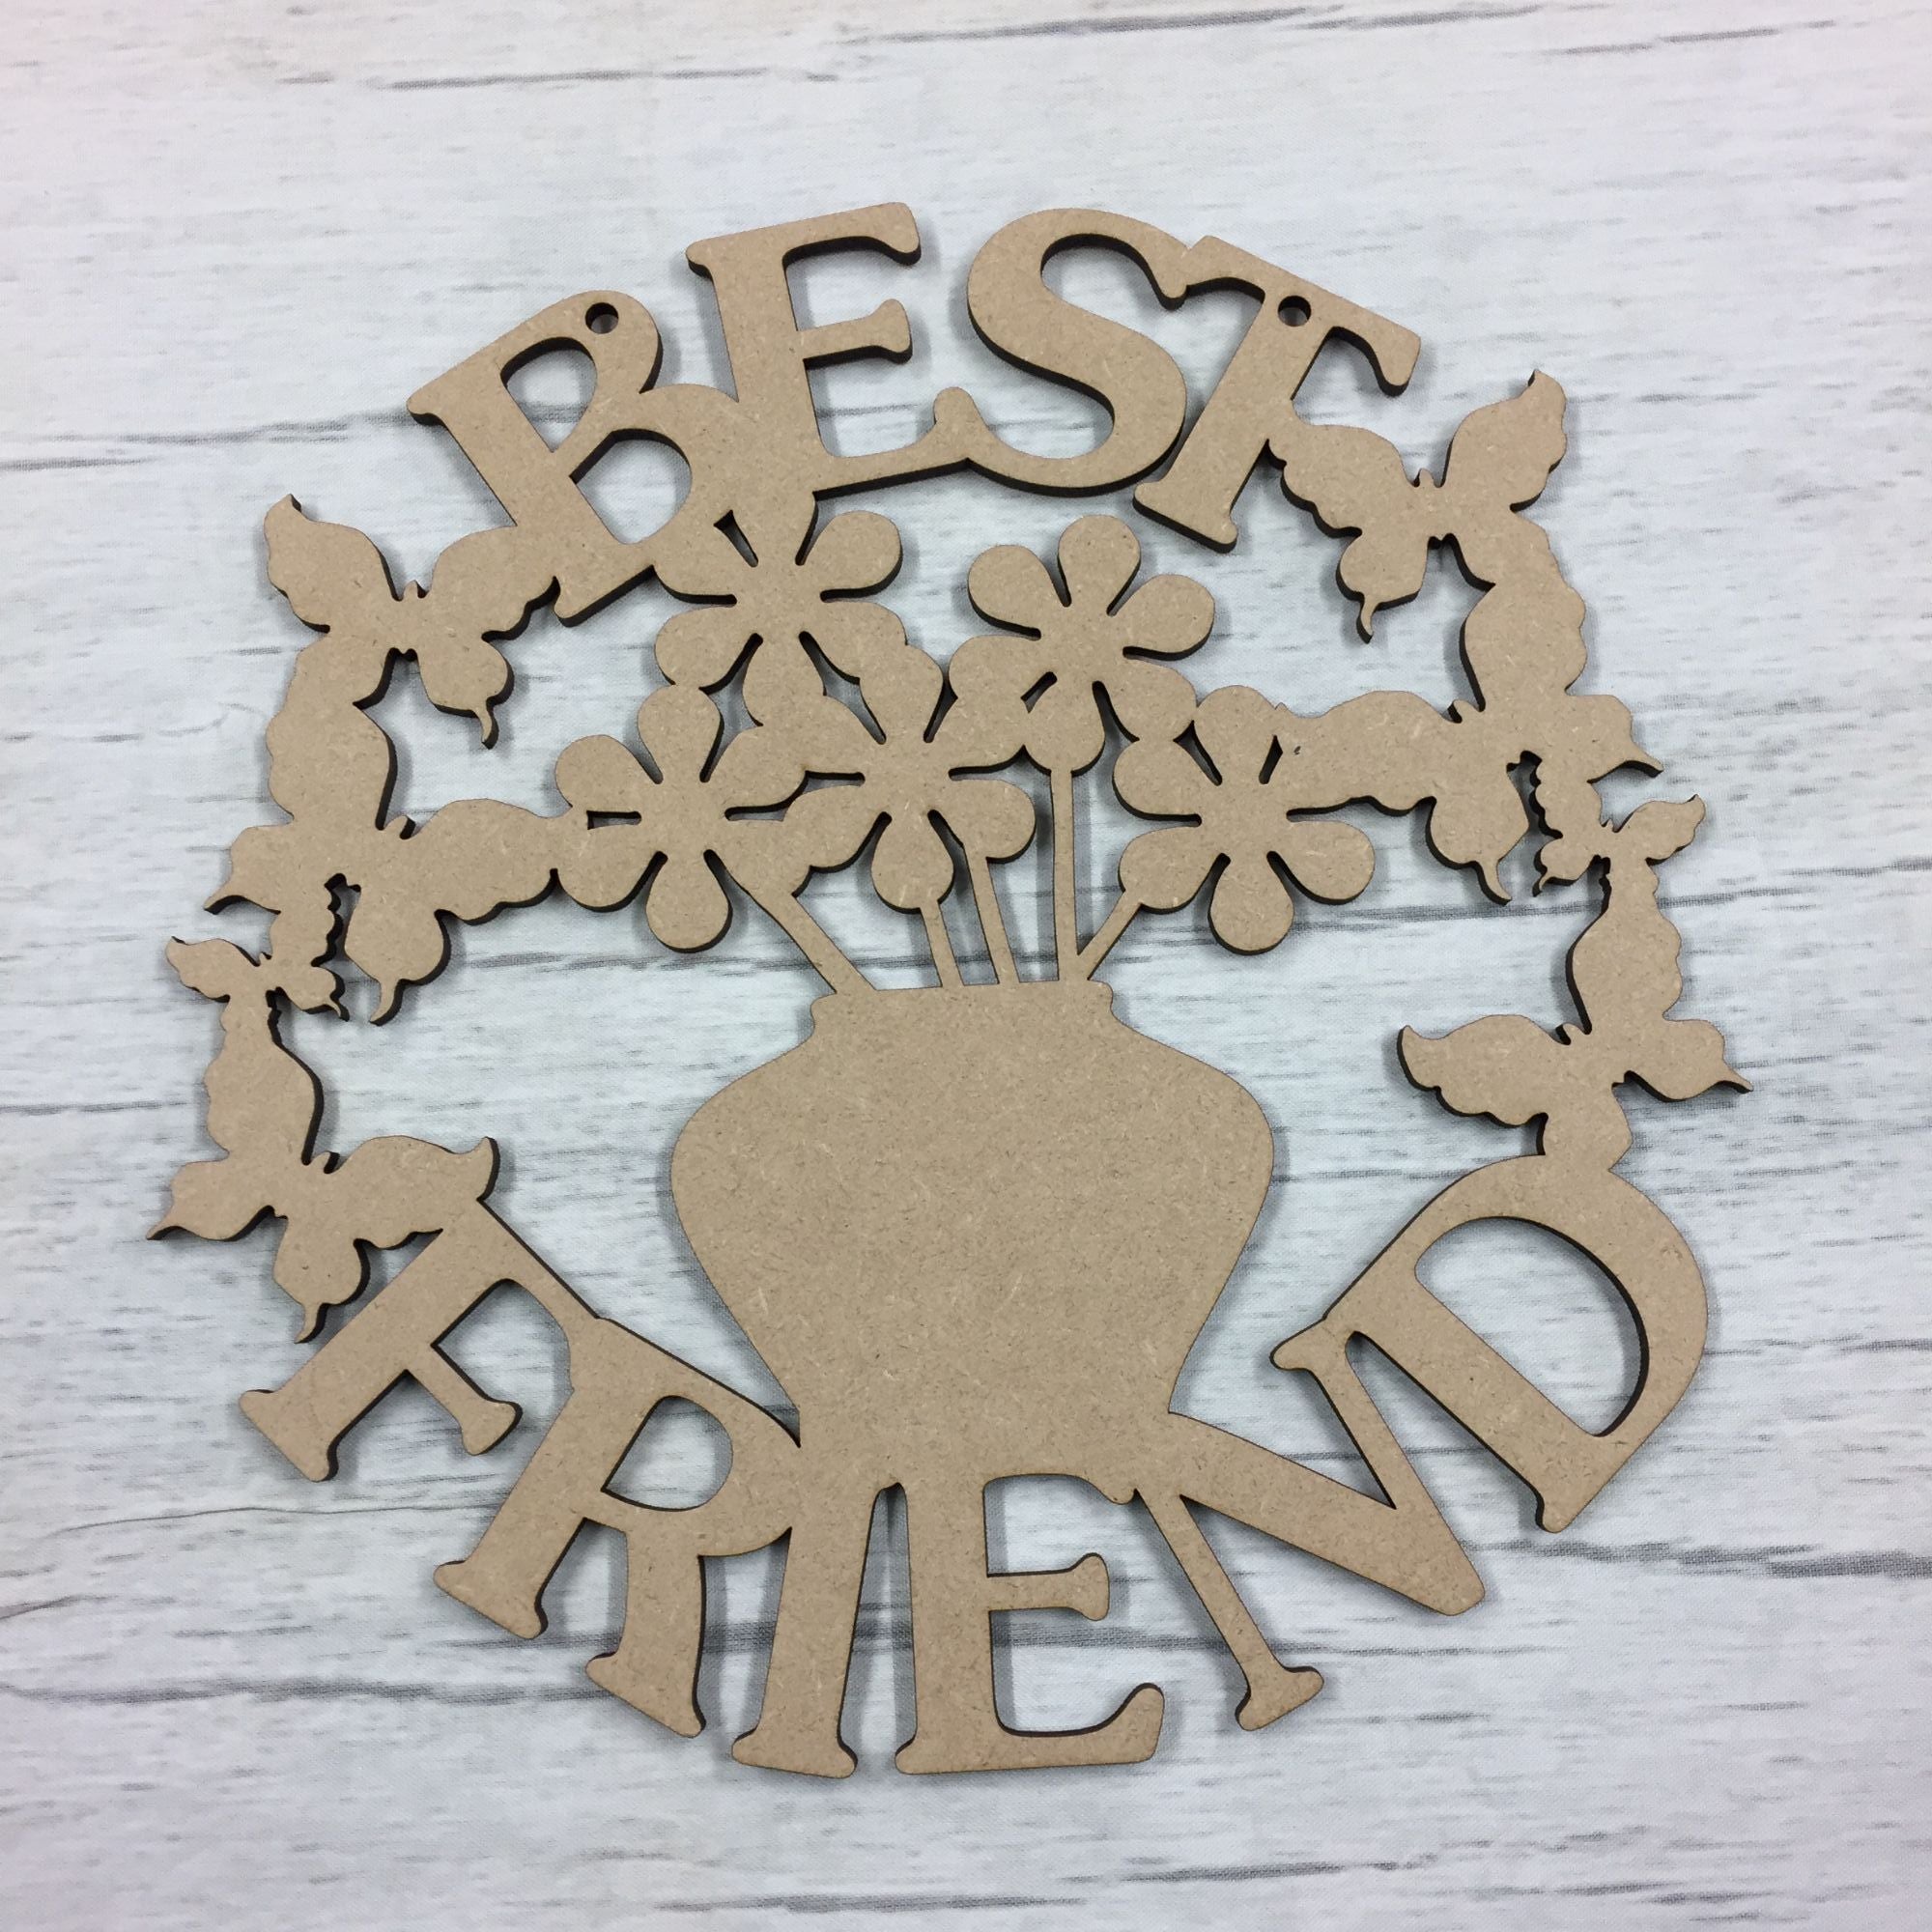 Best Friend' - hanging plaque